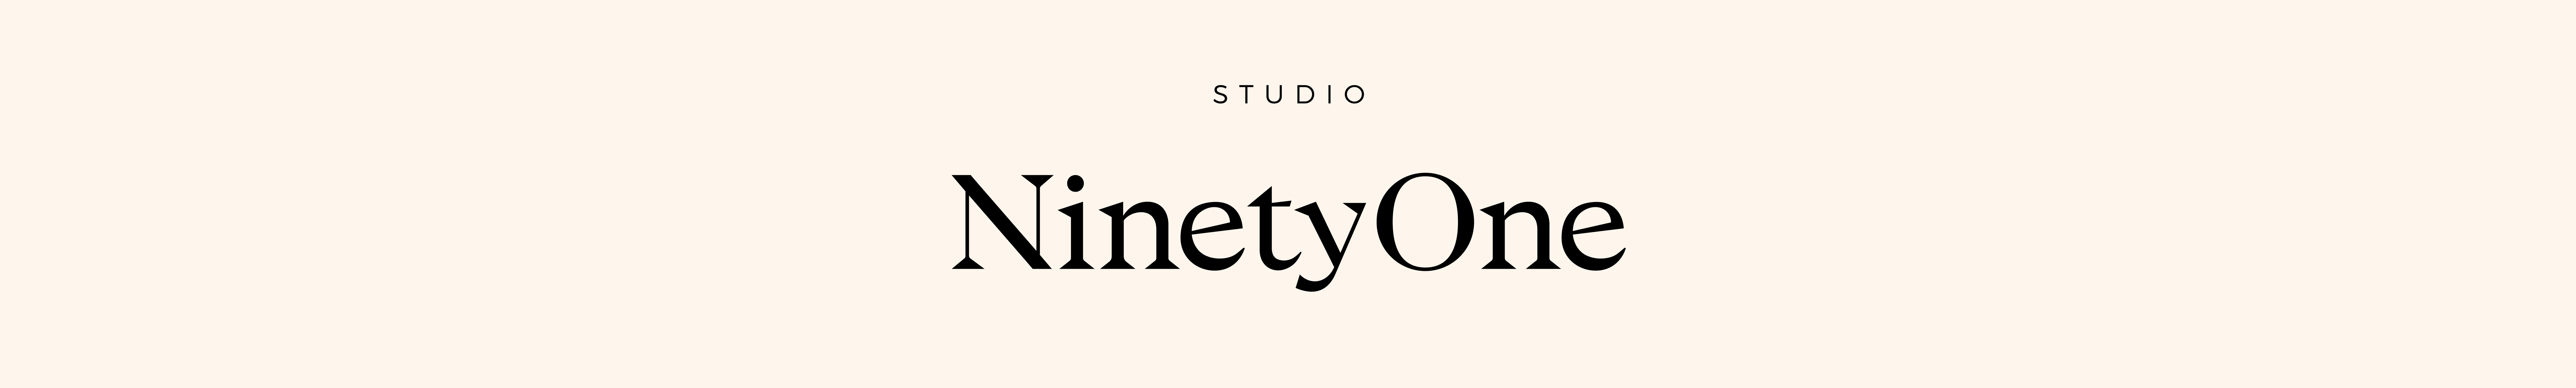 Studio NinetyOne's profile banner